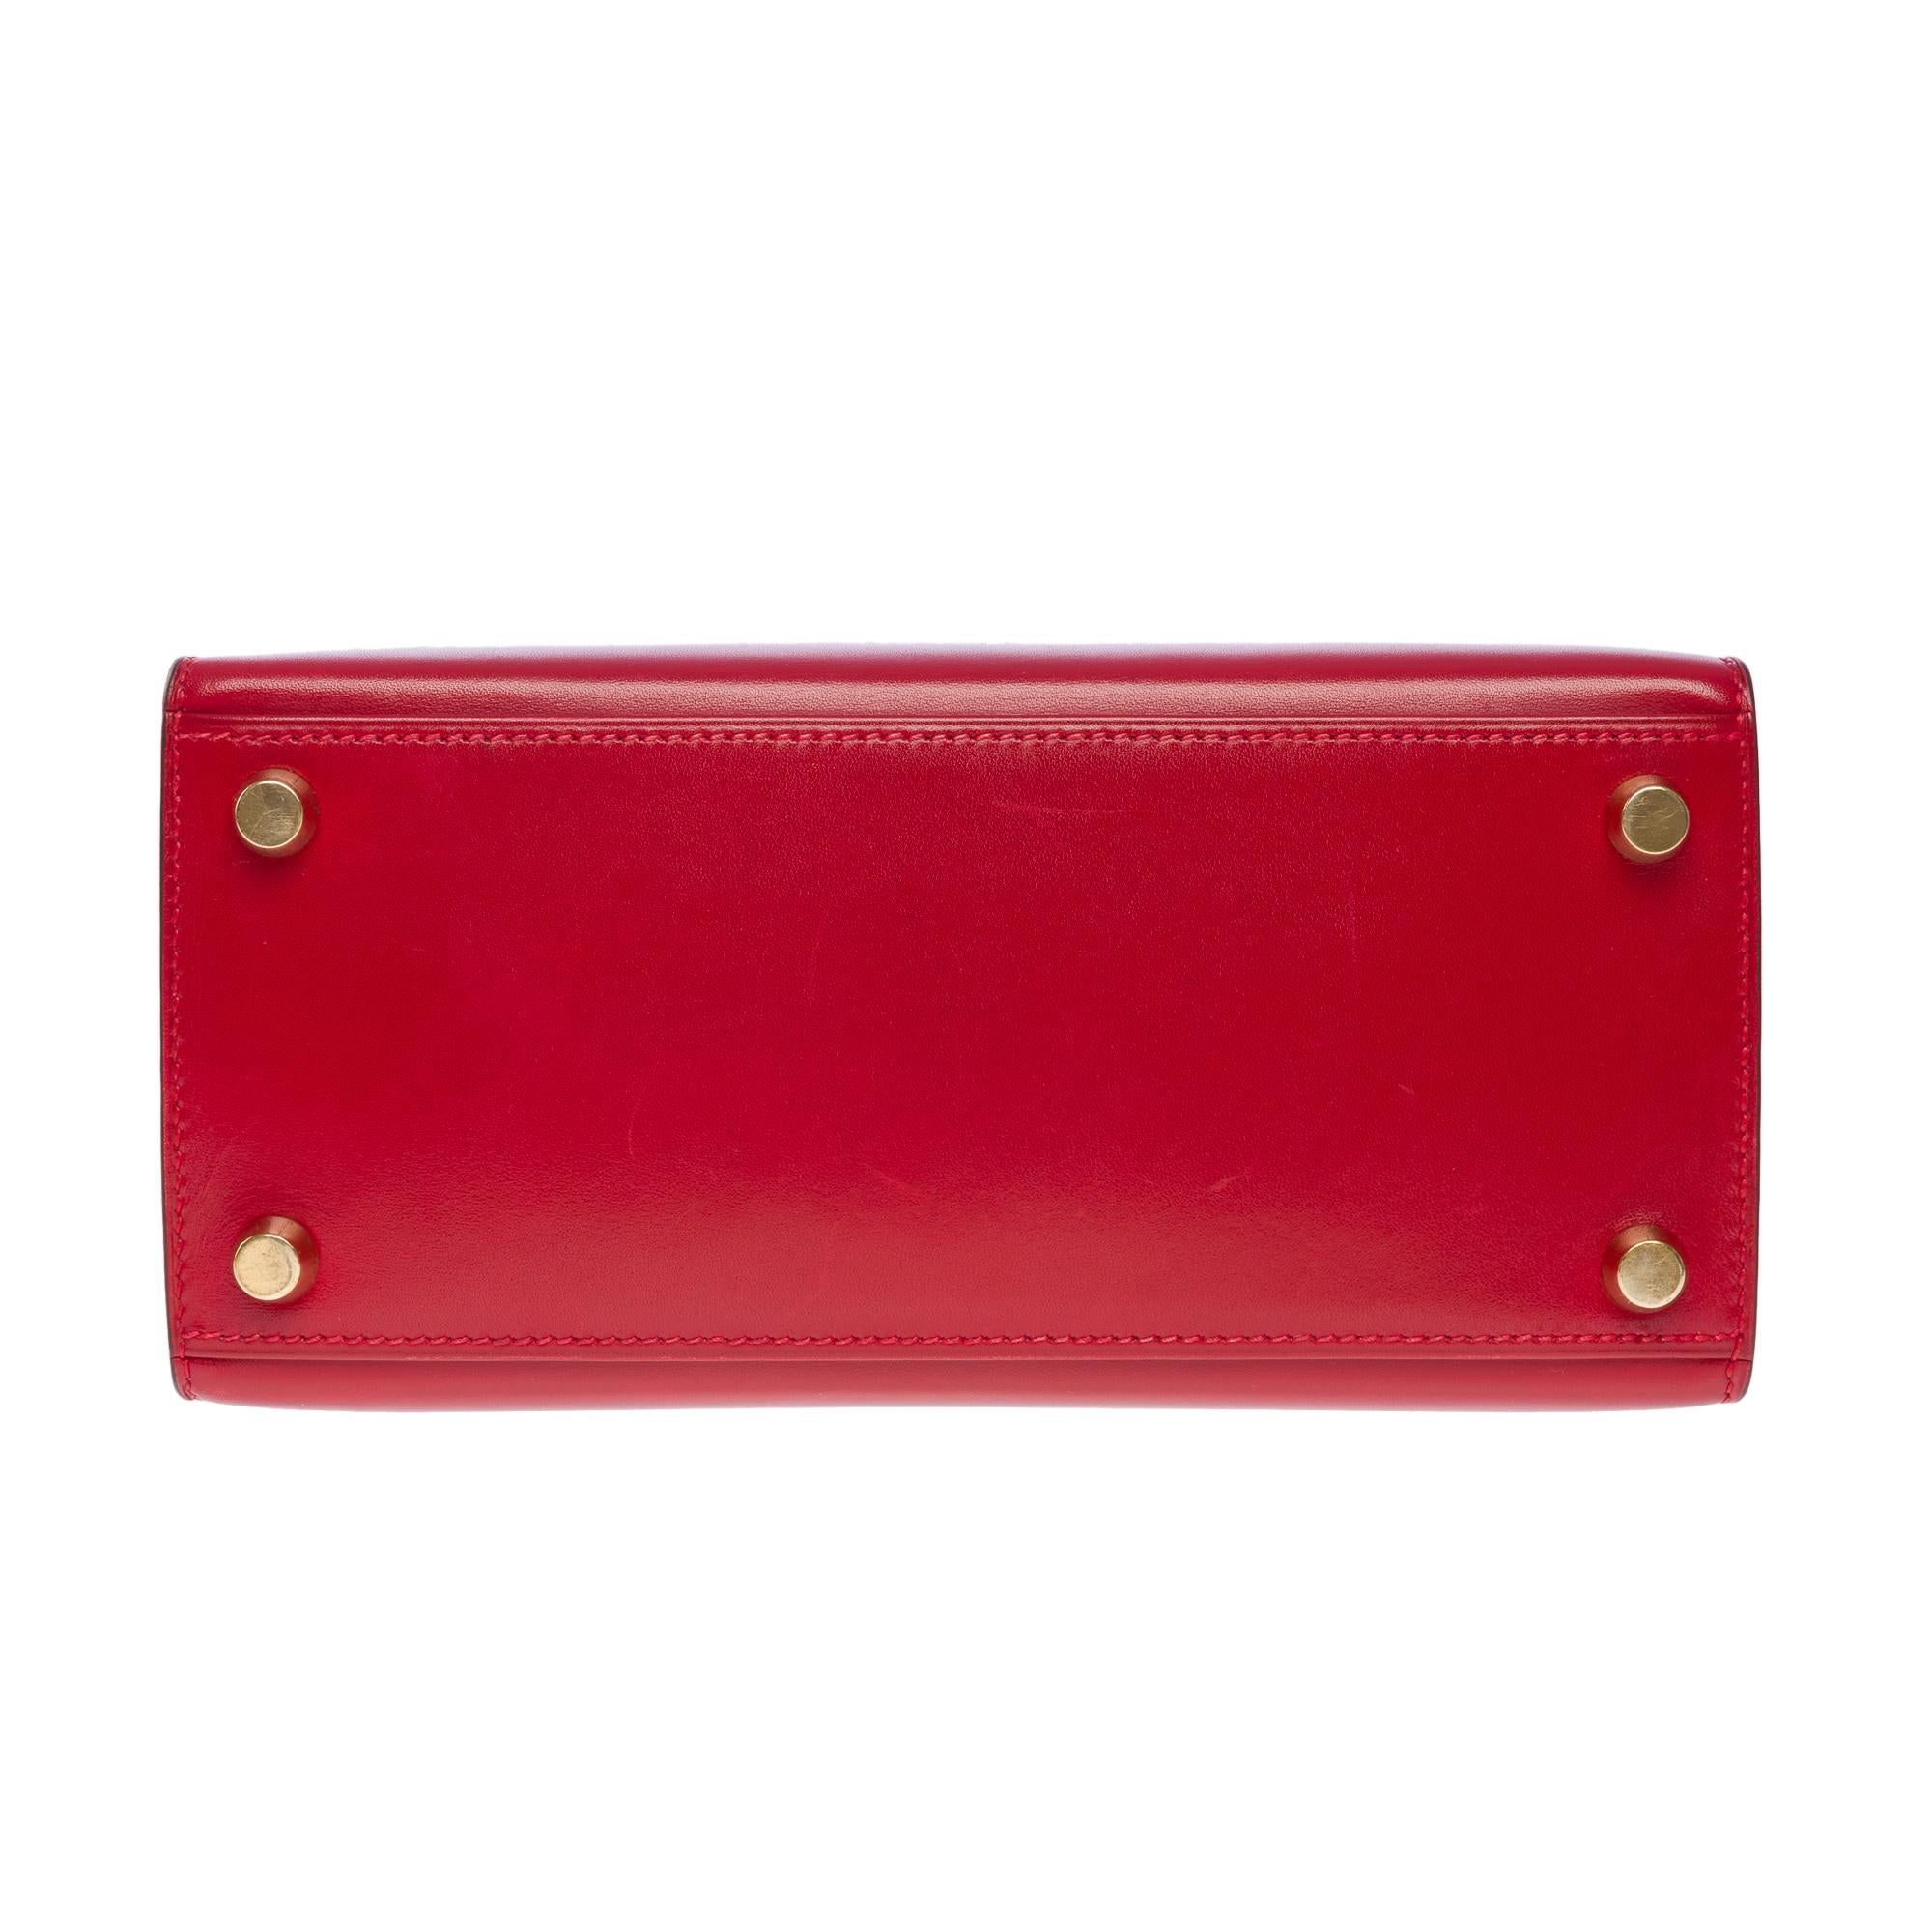 Rare Hermès Mini Kelly 20cm handbag double strap in Red H box calfskin, GHW For Sale 7